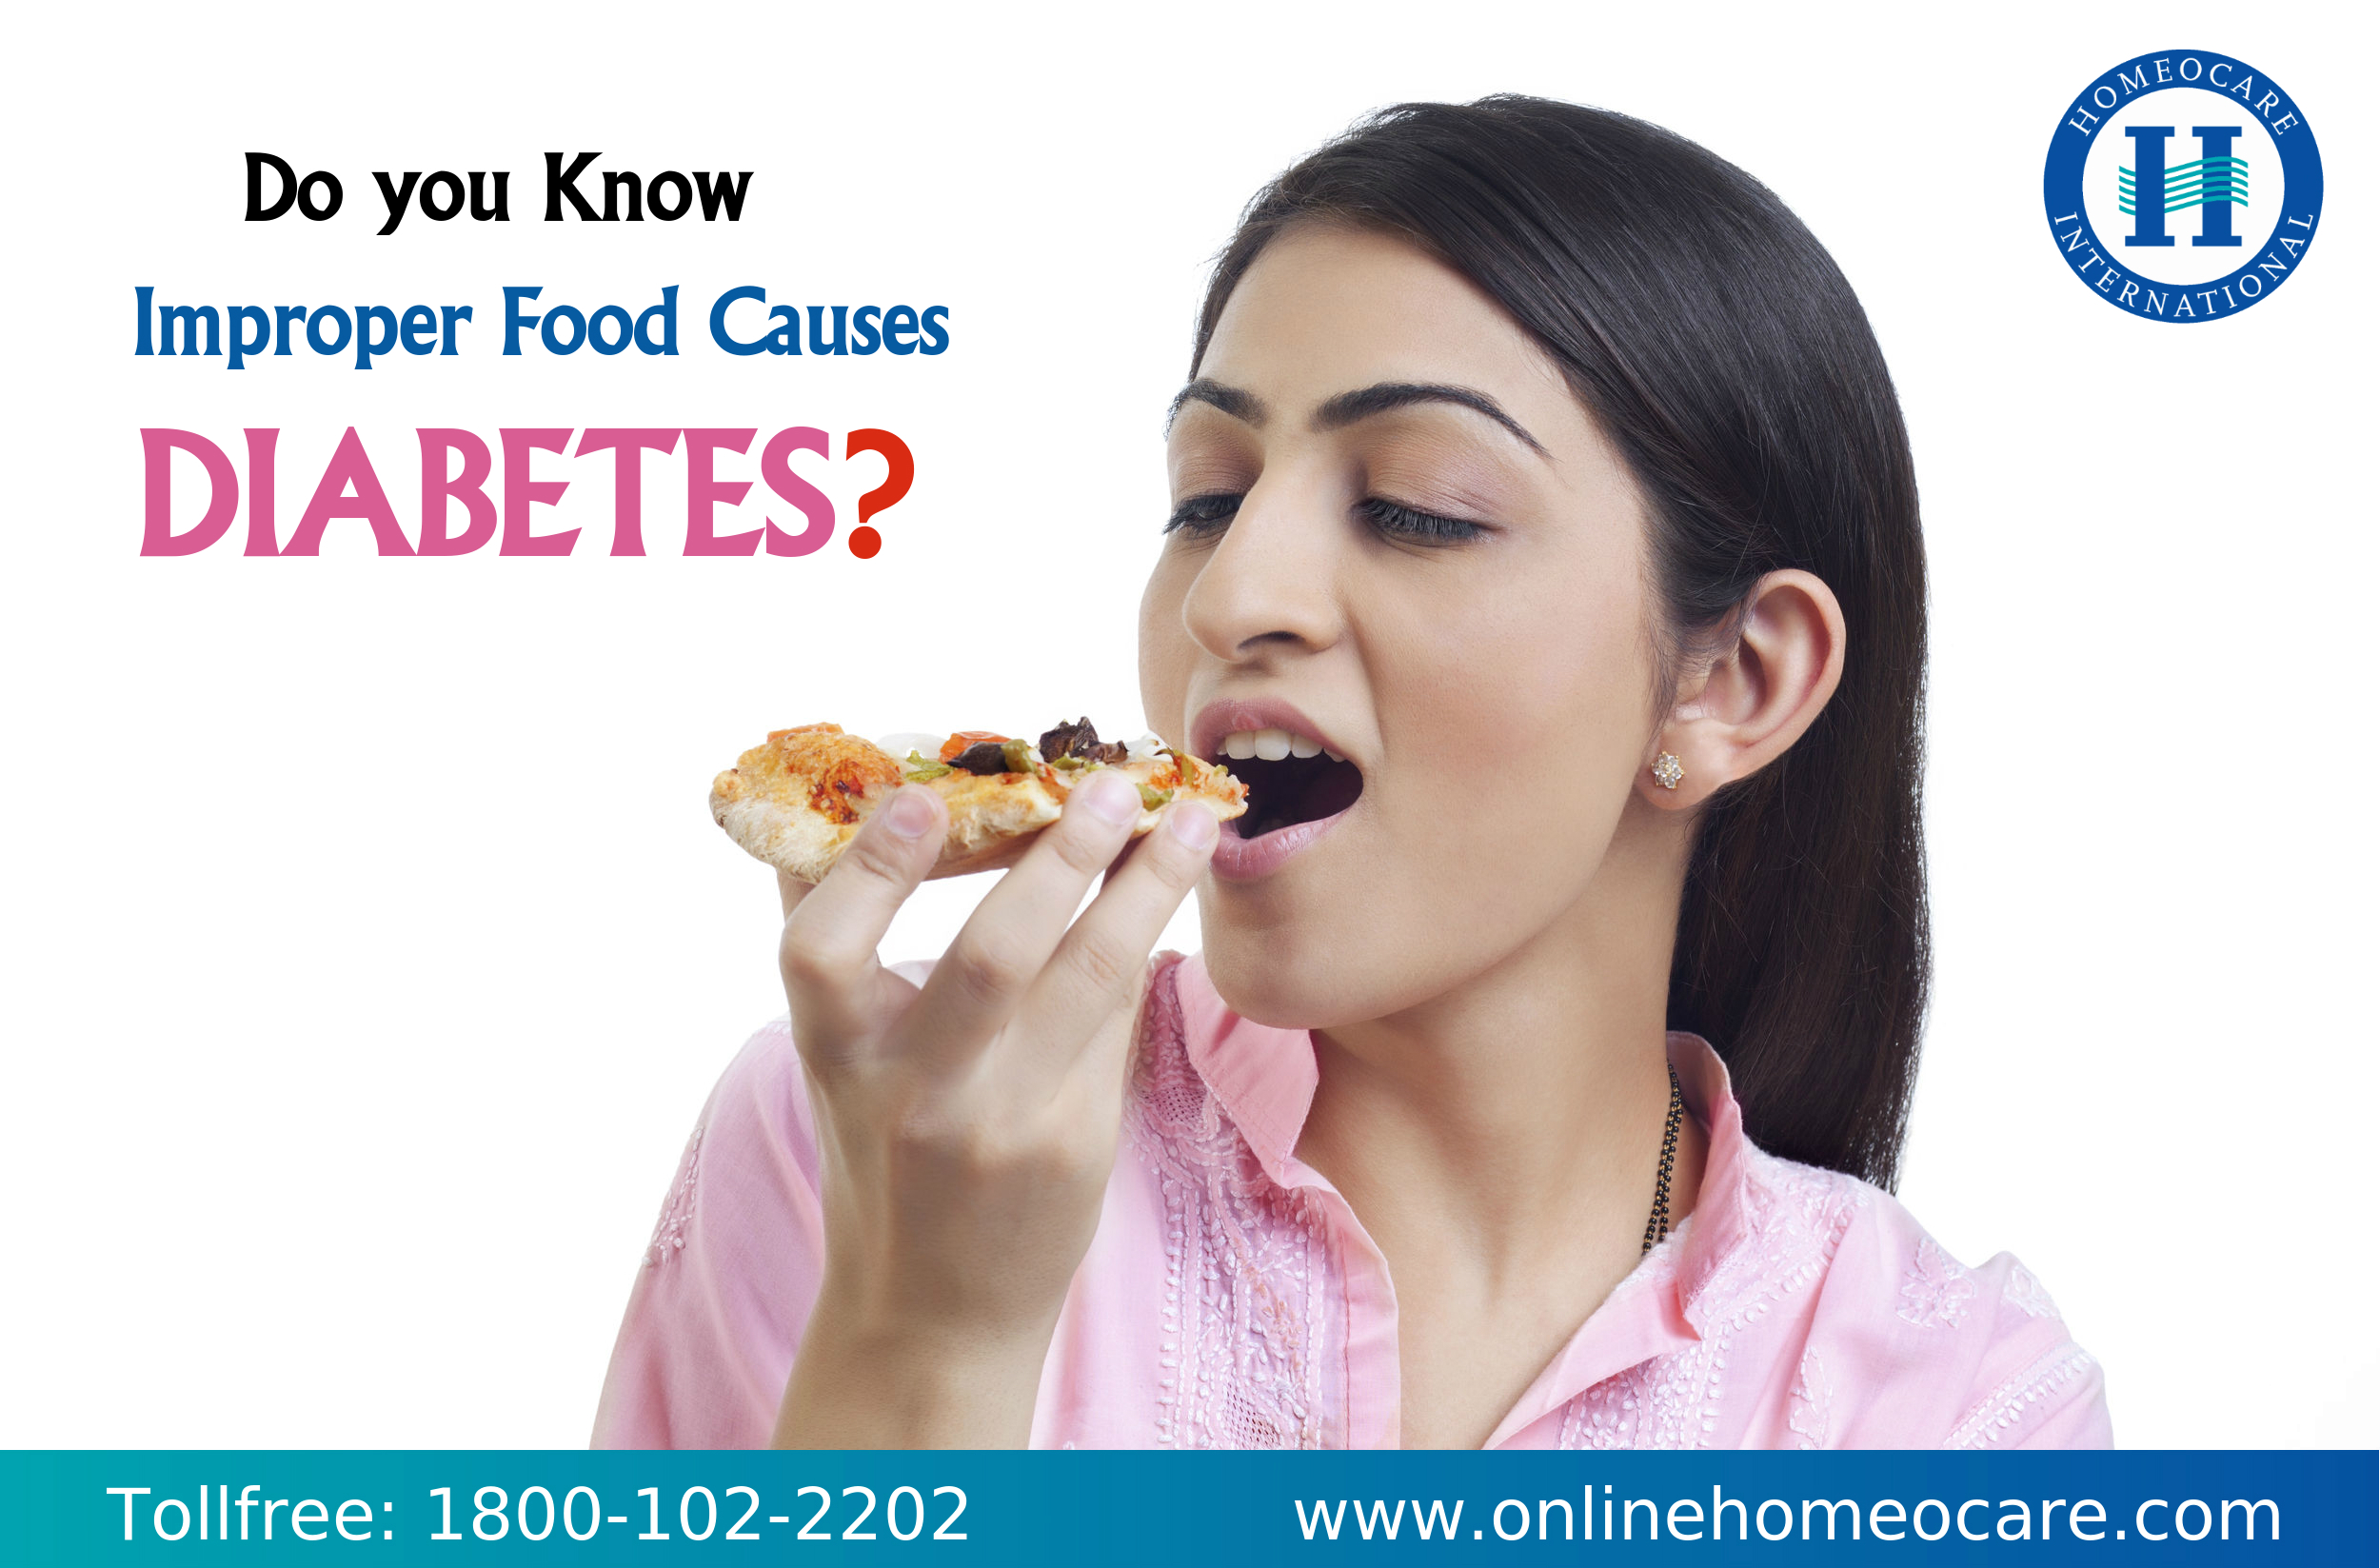 Improper Food causes diabetes